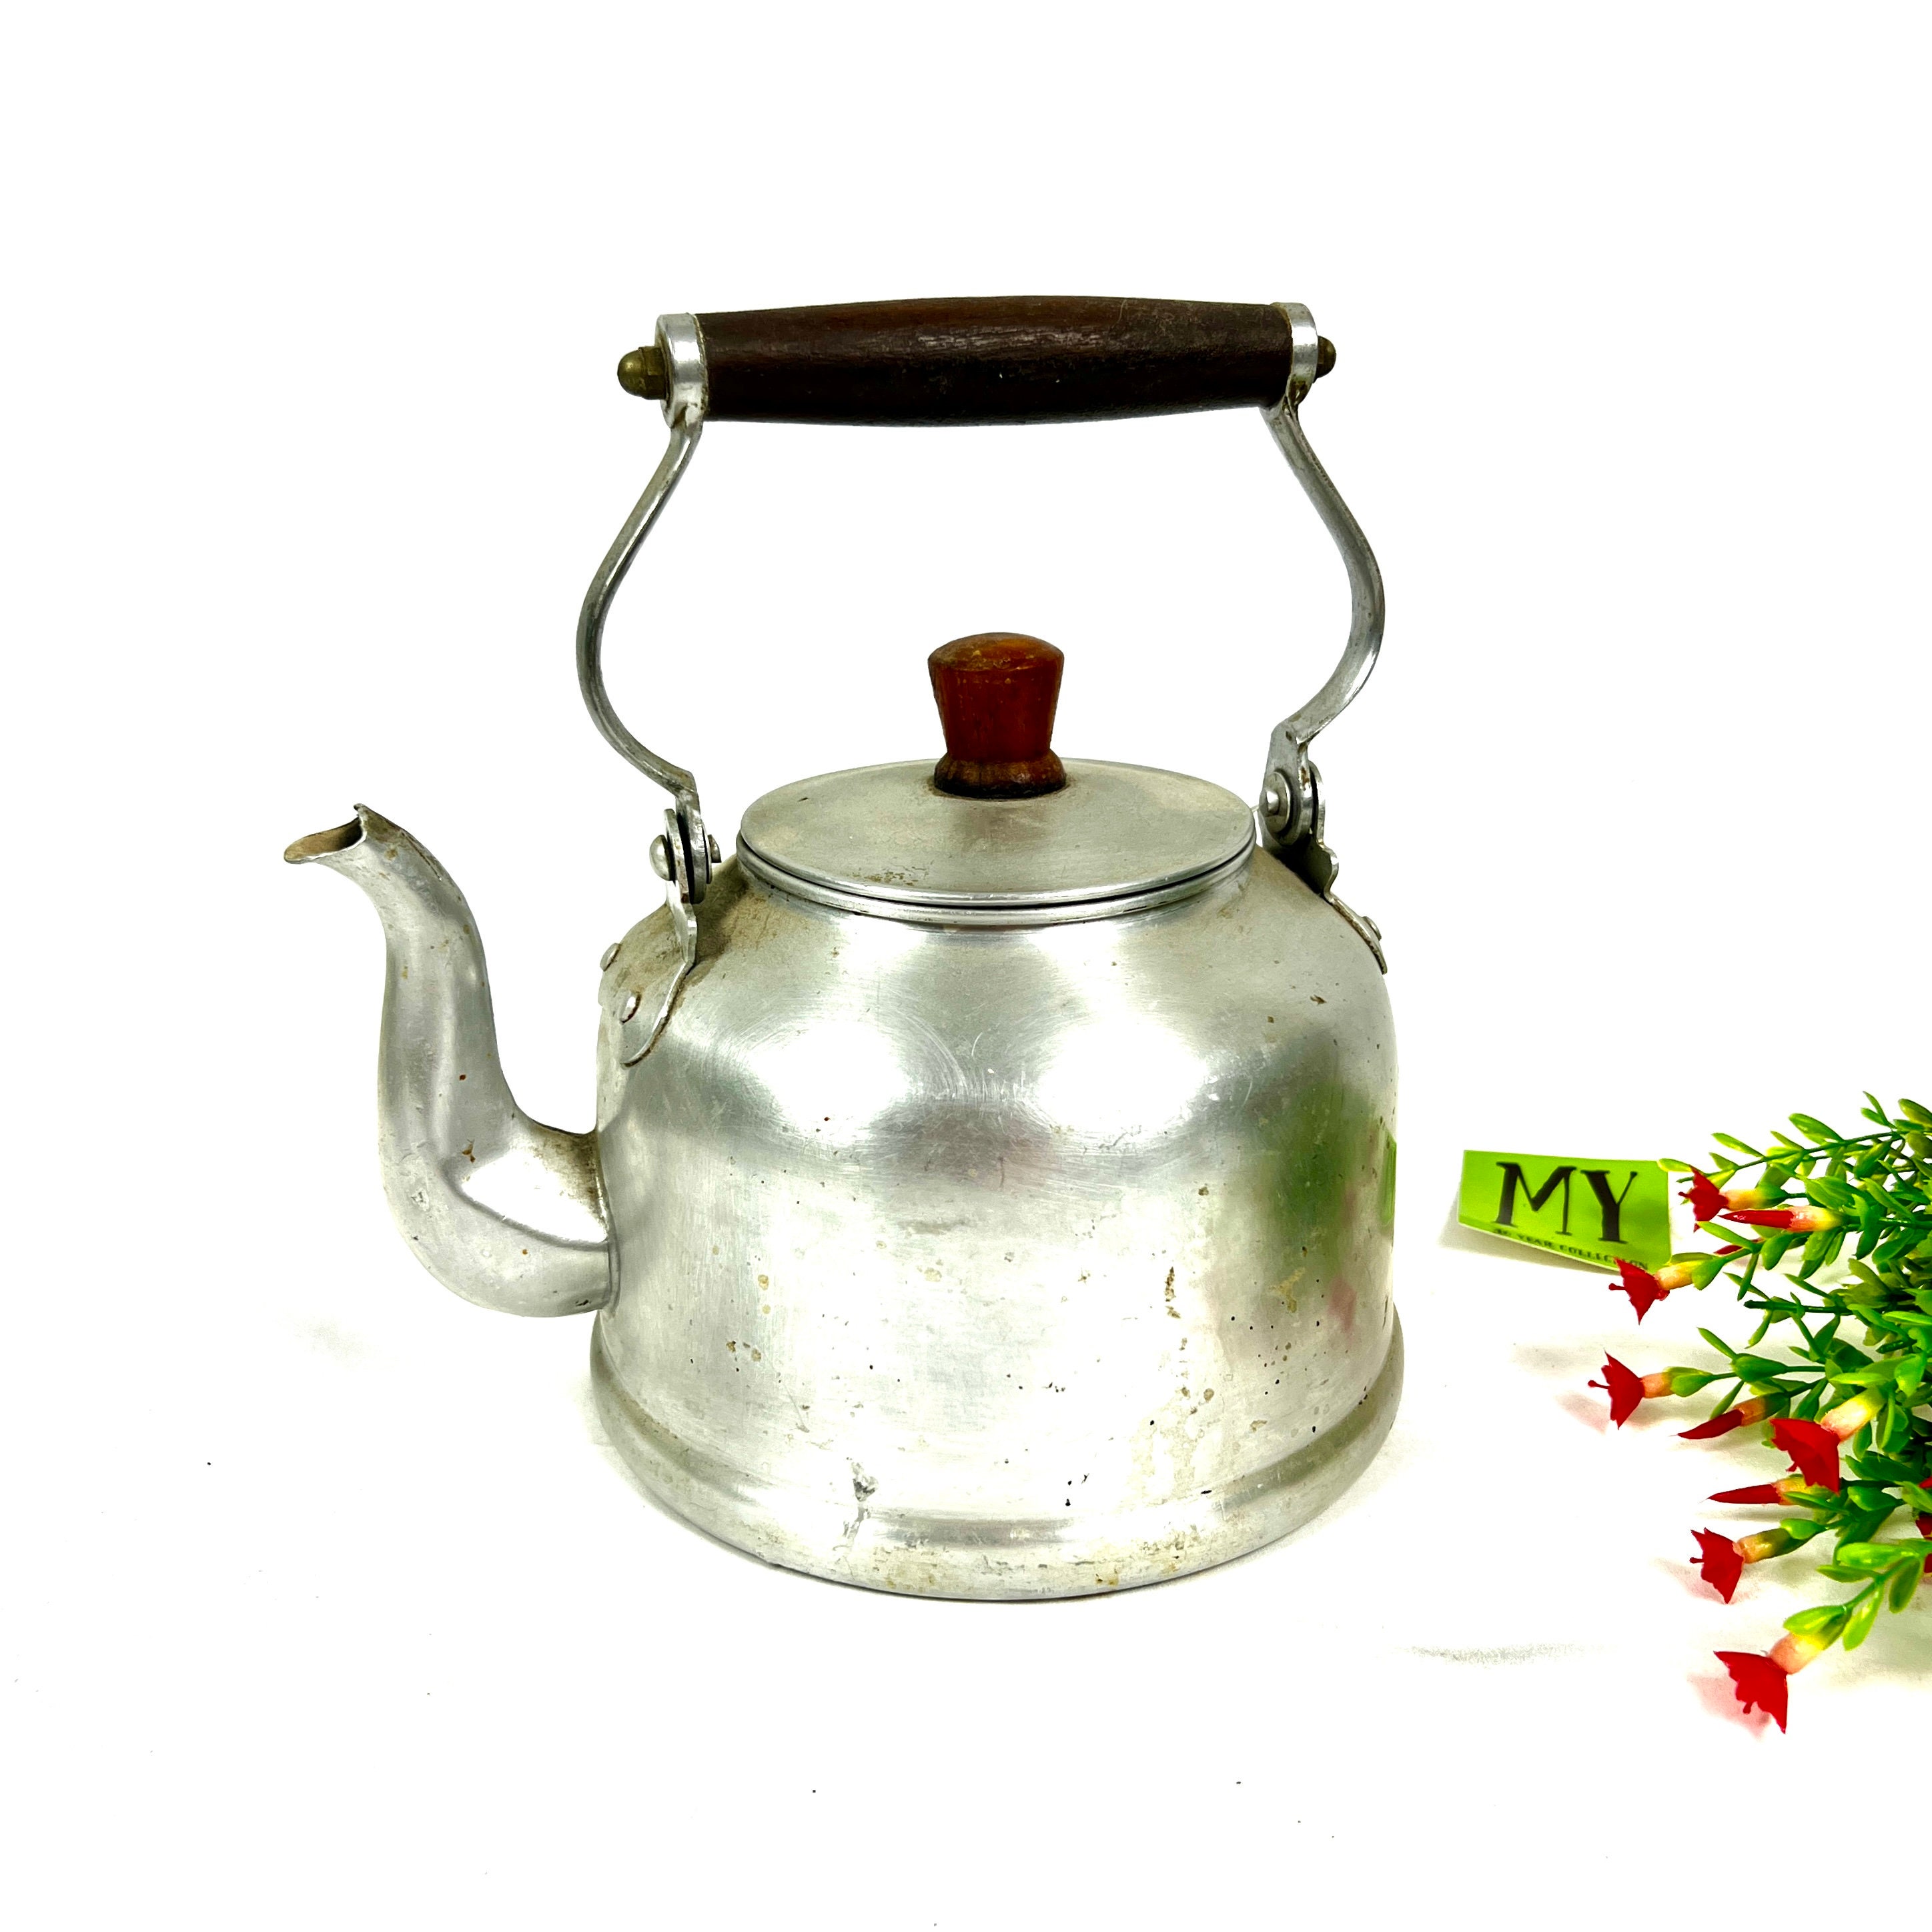 Japanese Stainless Steel Teapot Handmade Kyusu Made in Japan 0.7L